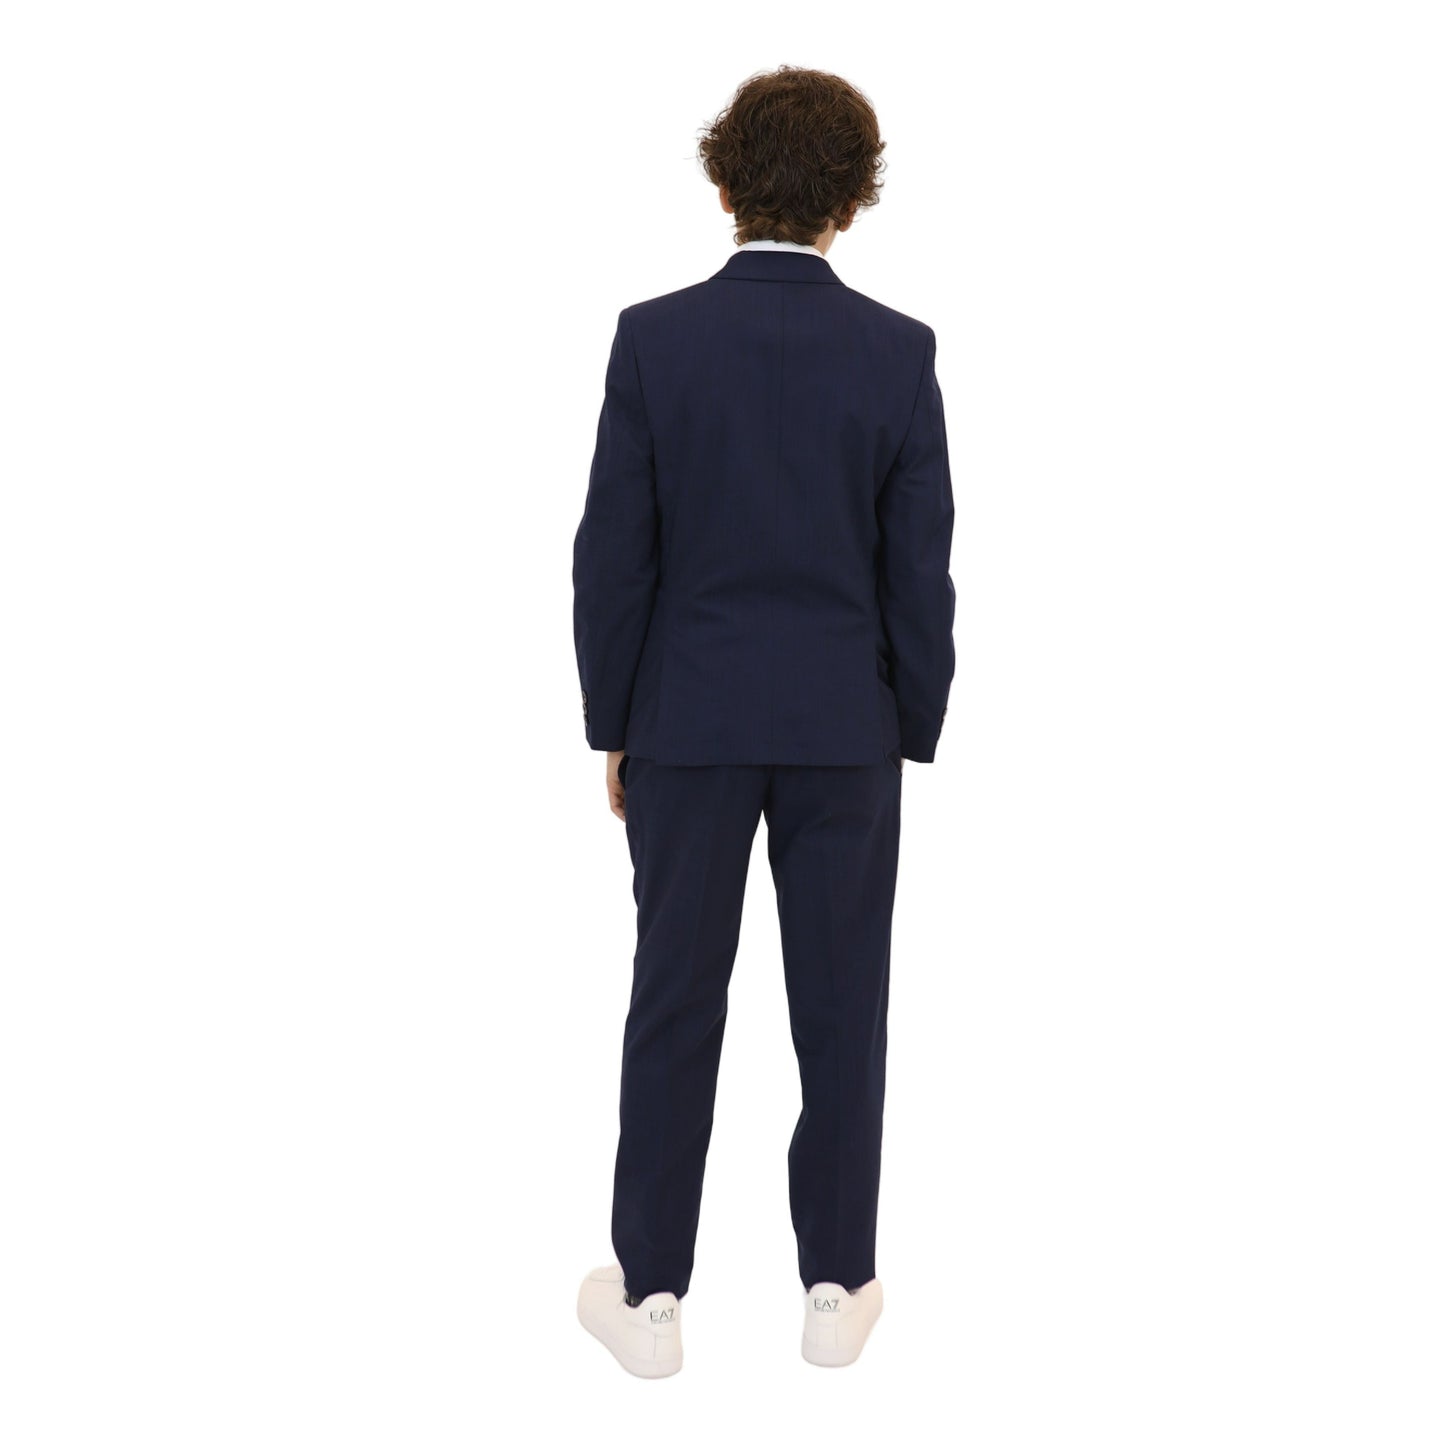 Marc New York Boys Skinny Blue Fancy Suit W0715